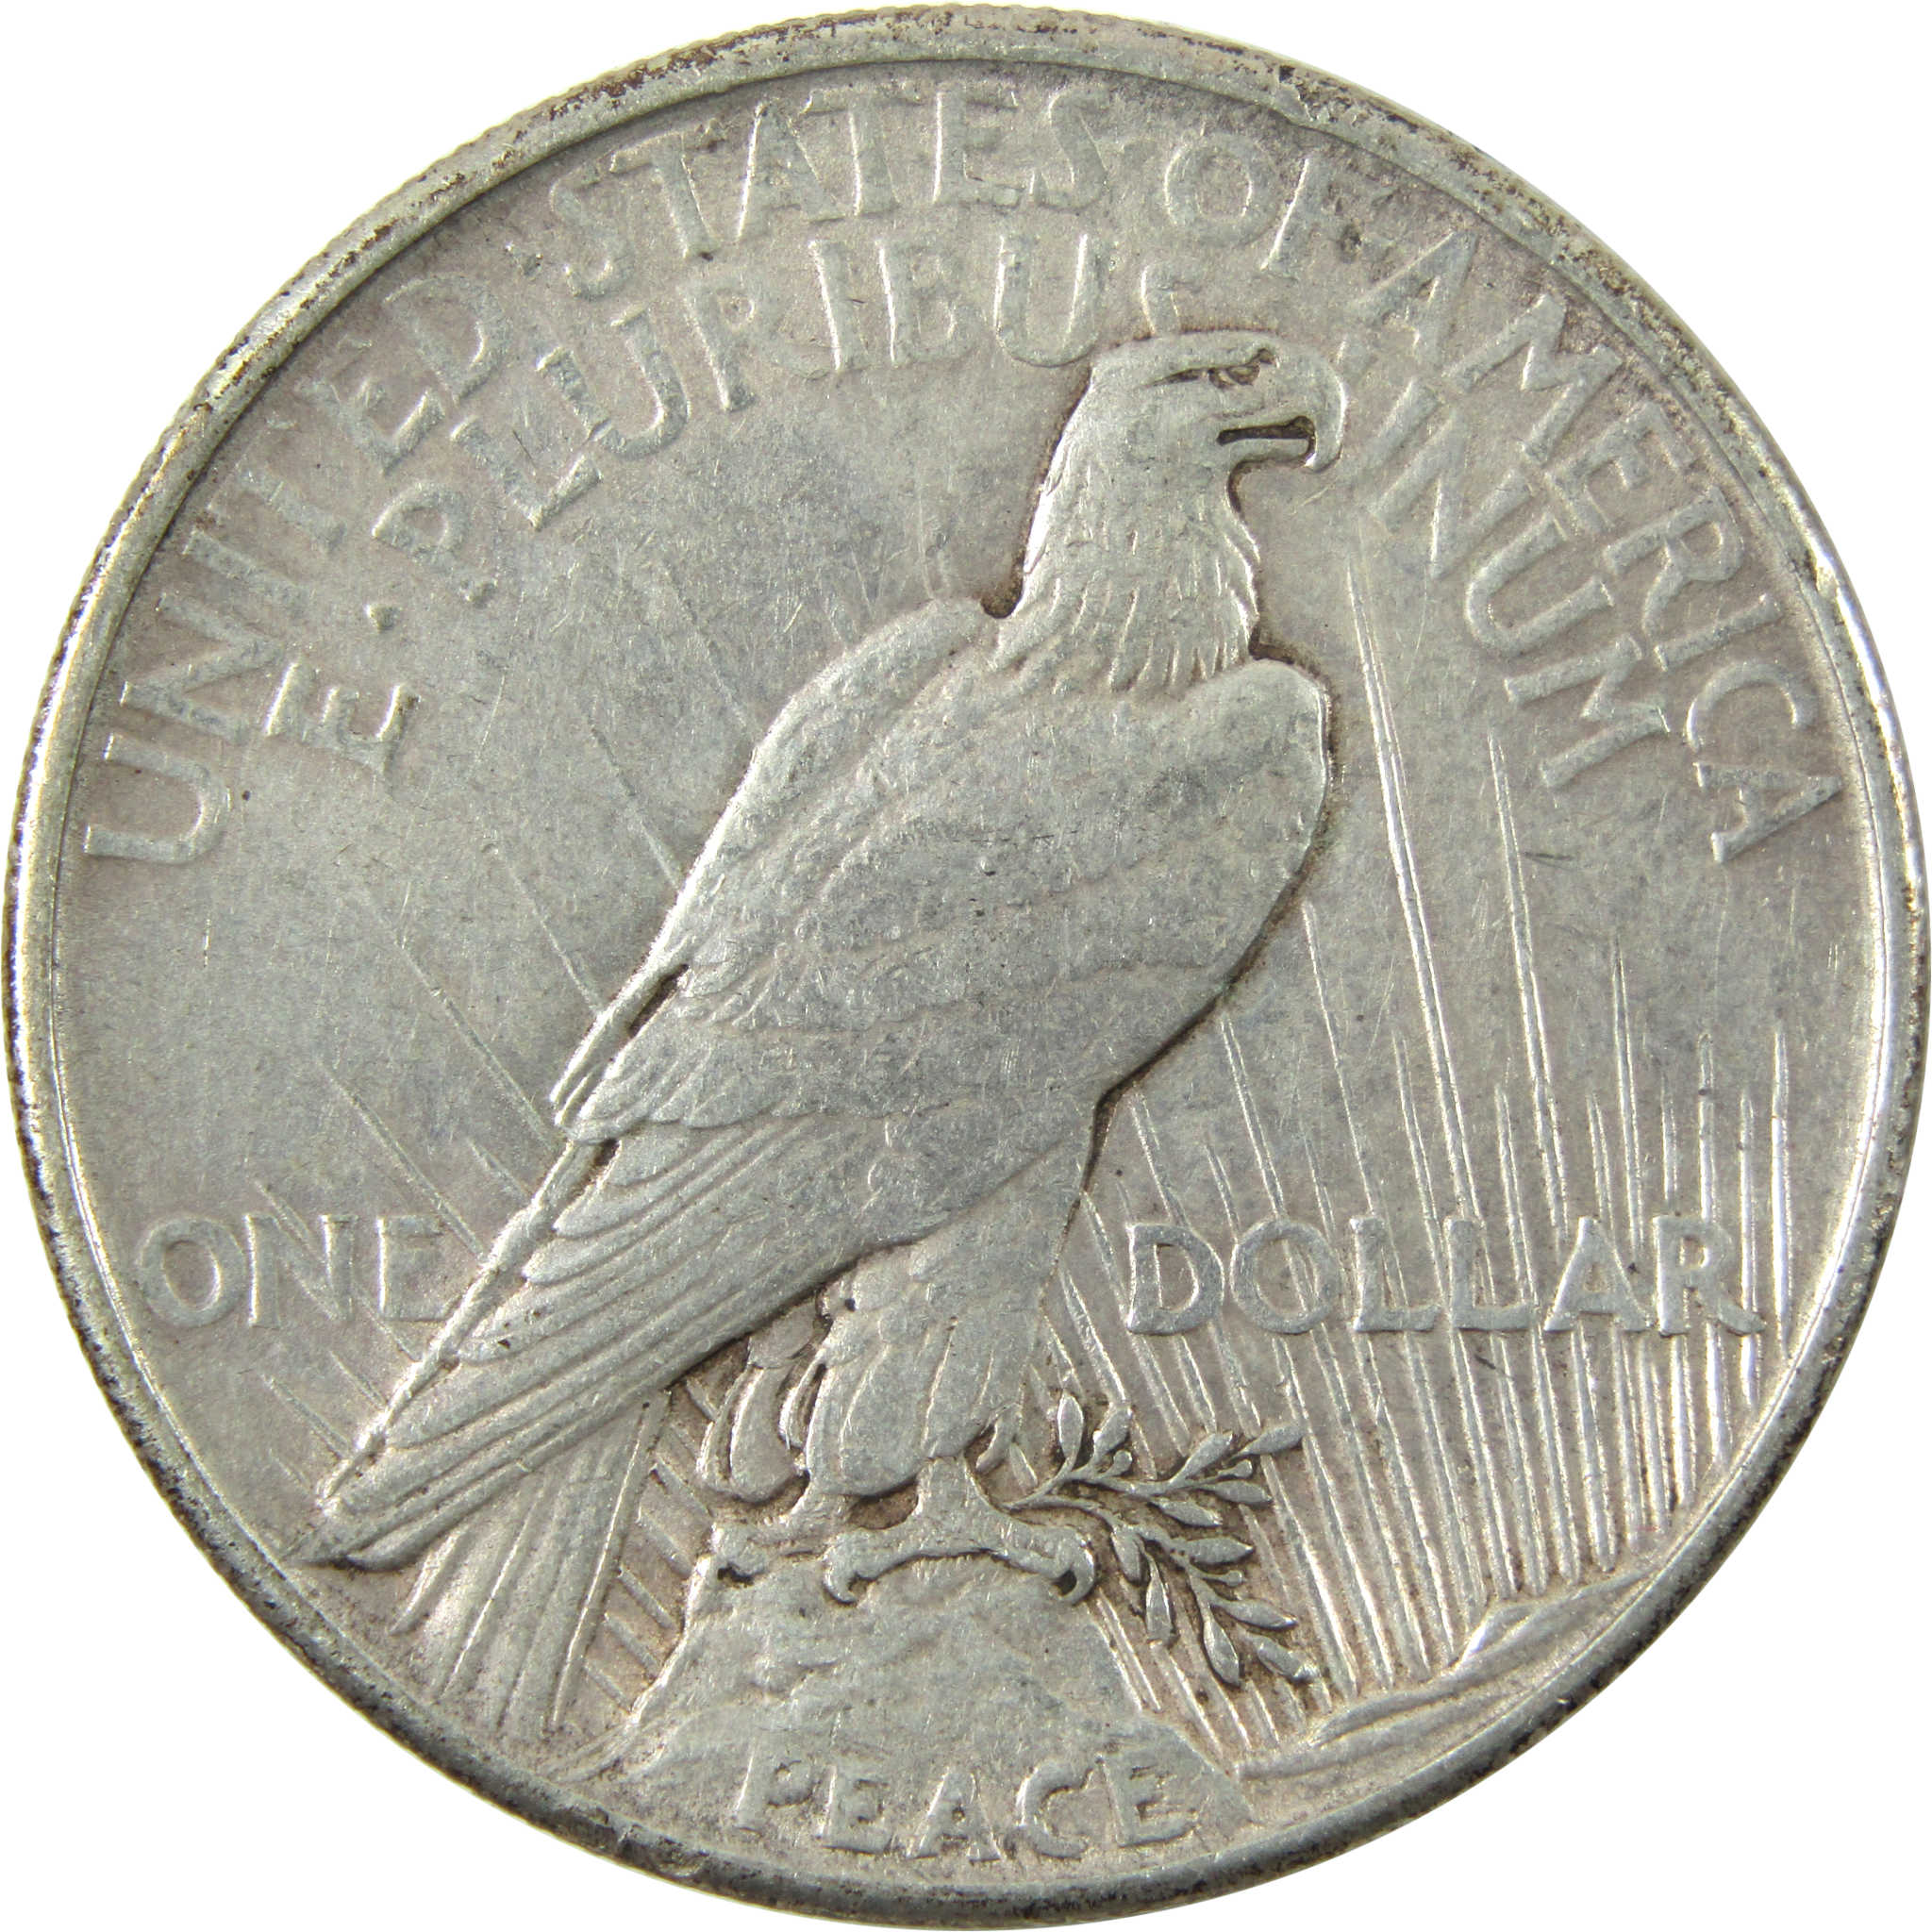 1921 High Relief Peace Dollar VF Very Fine Silver $1 Coin SKU:I14183